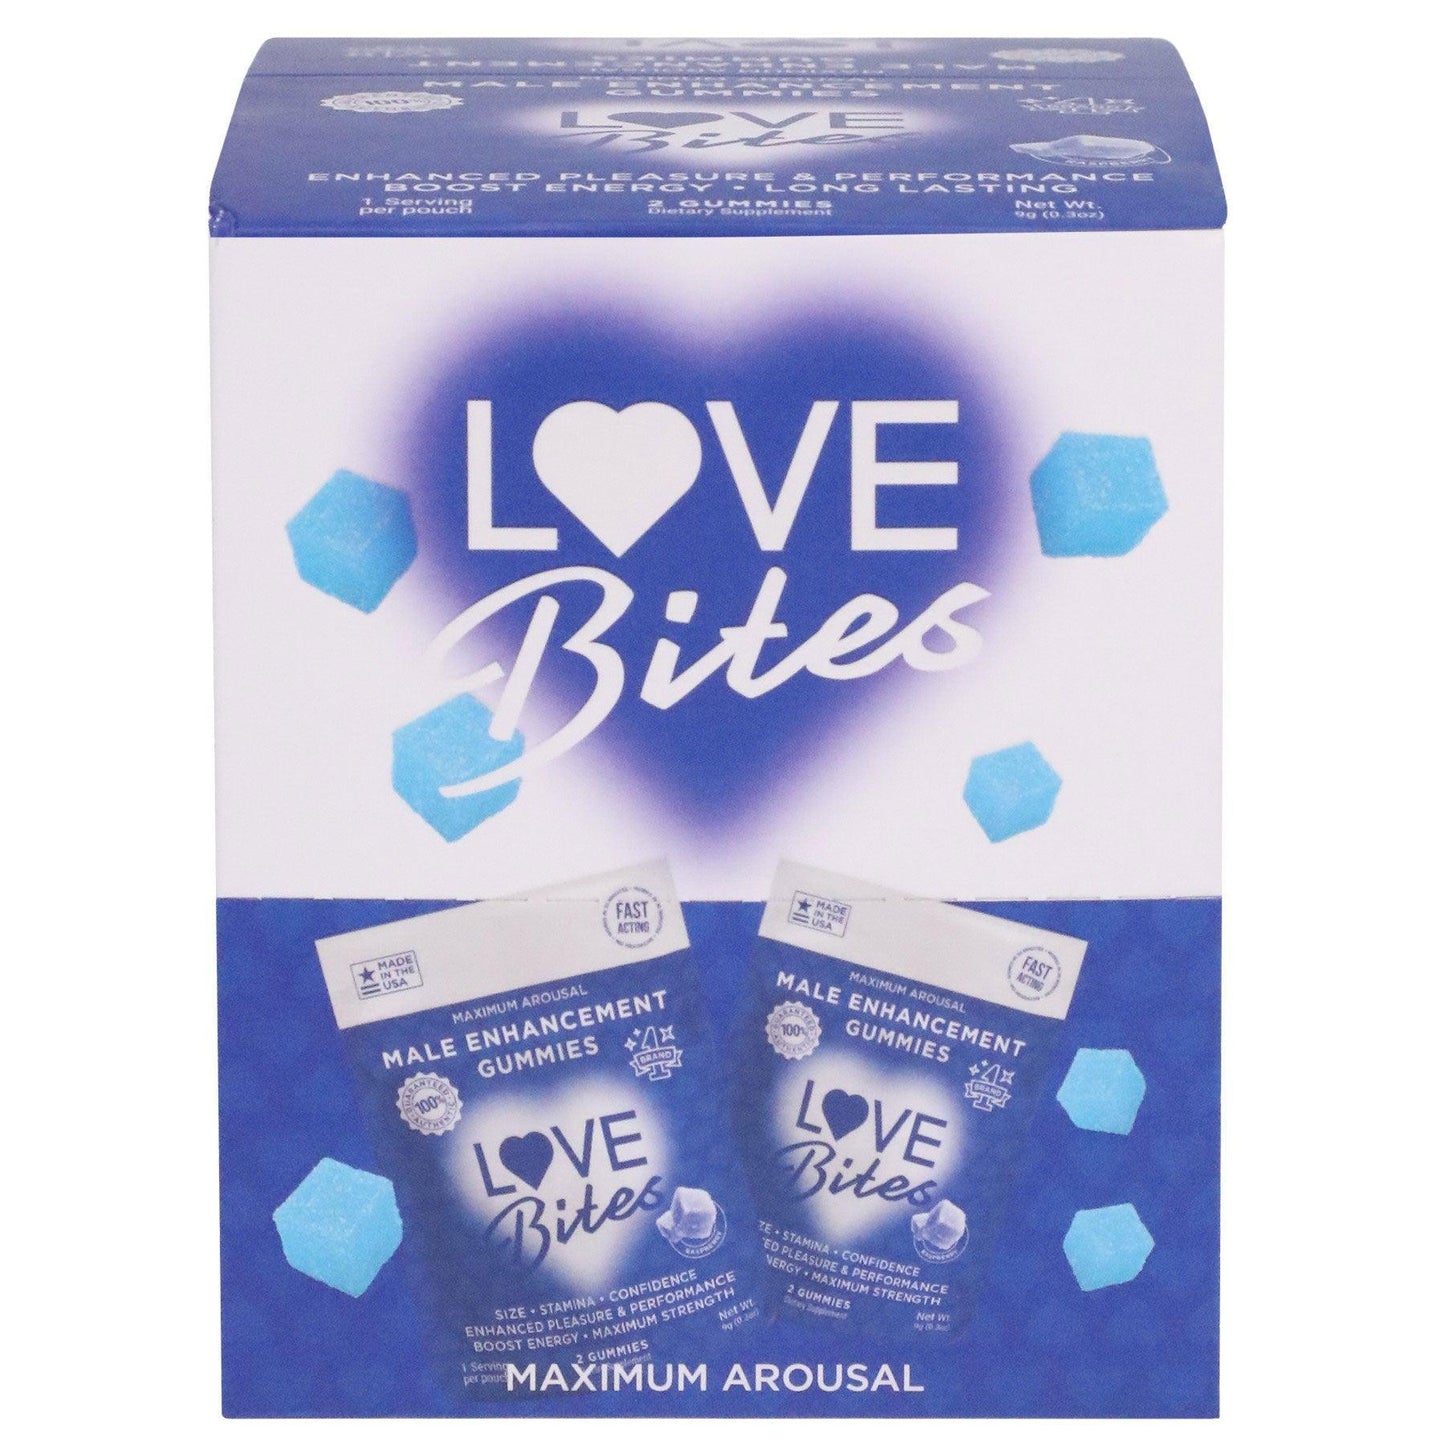 Love Bites - Male Enhancement Gummies - 12 Pack - My Sex Toy Hub